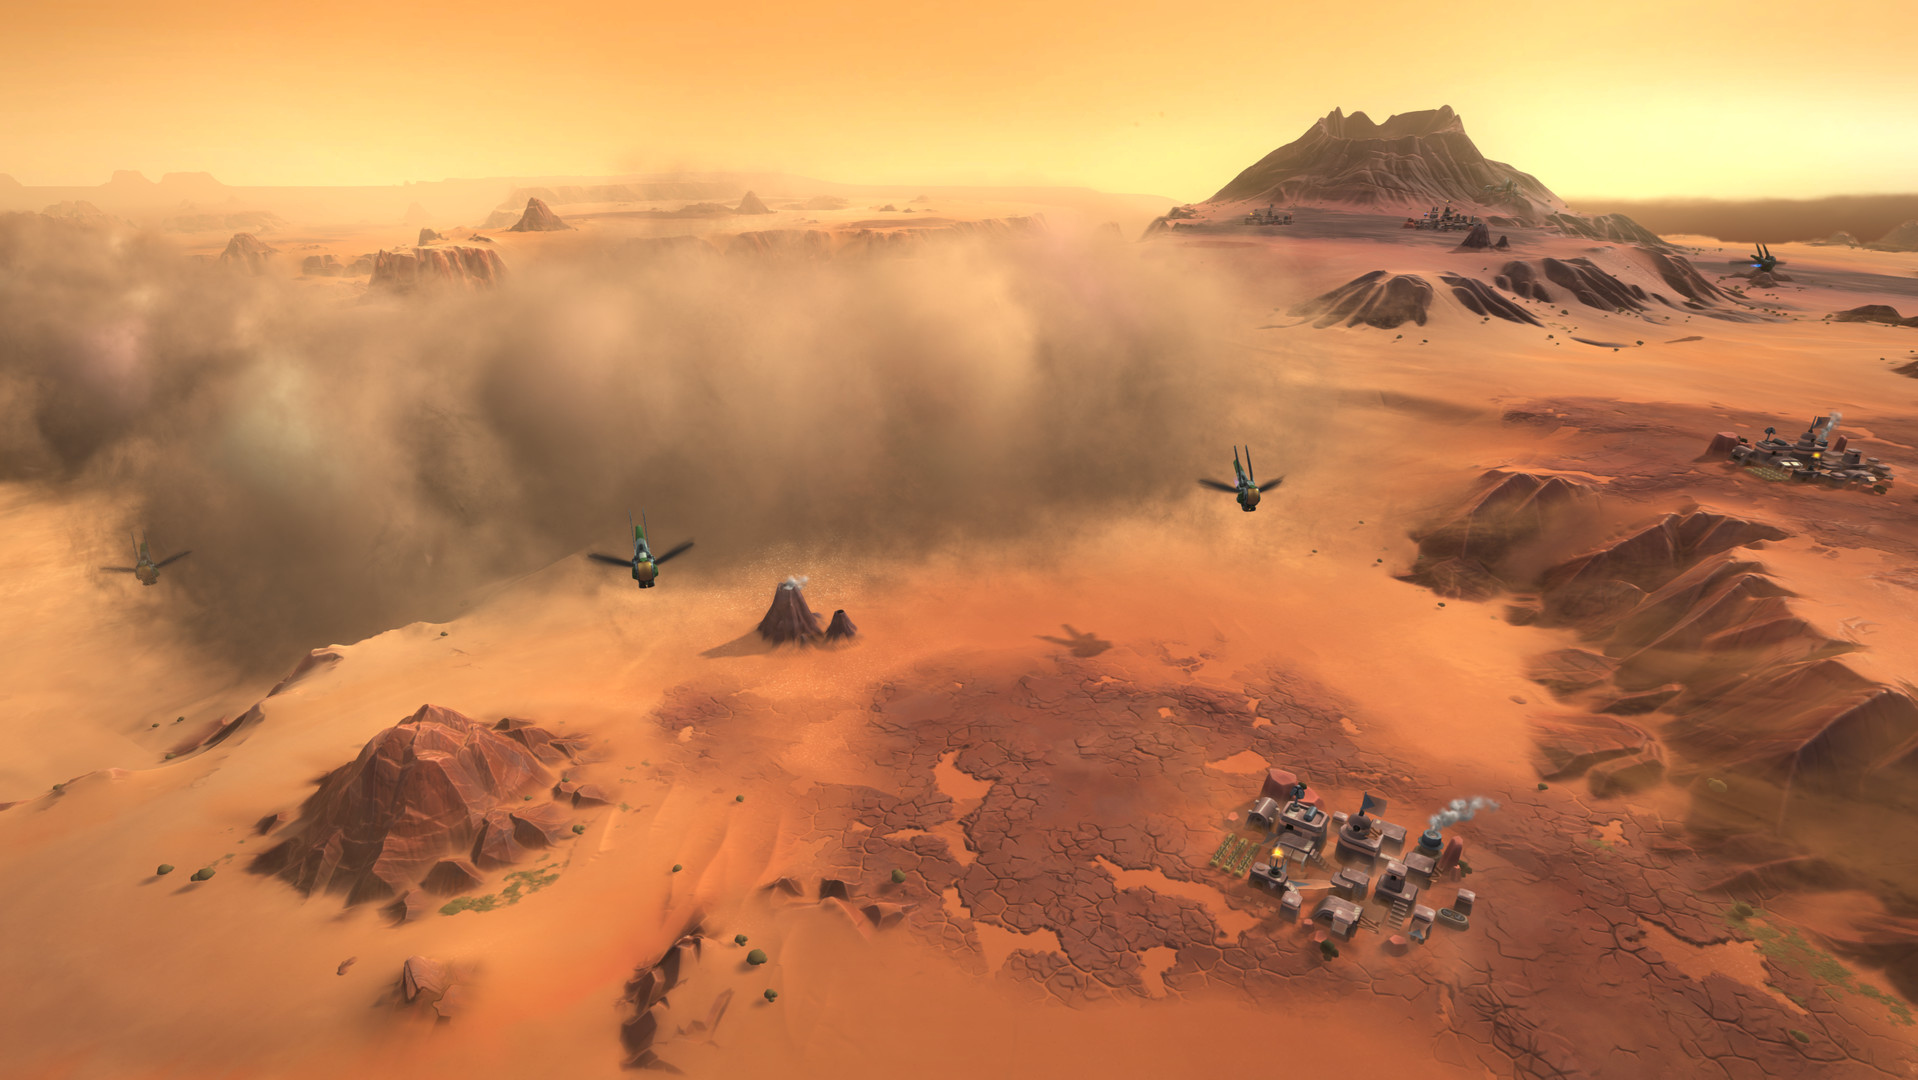 Dune spice wars screenshot 10. 12. 2021 6 2